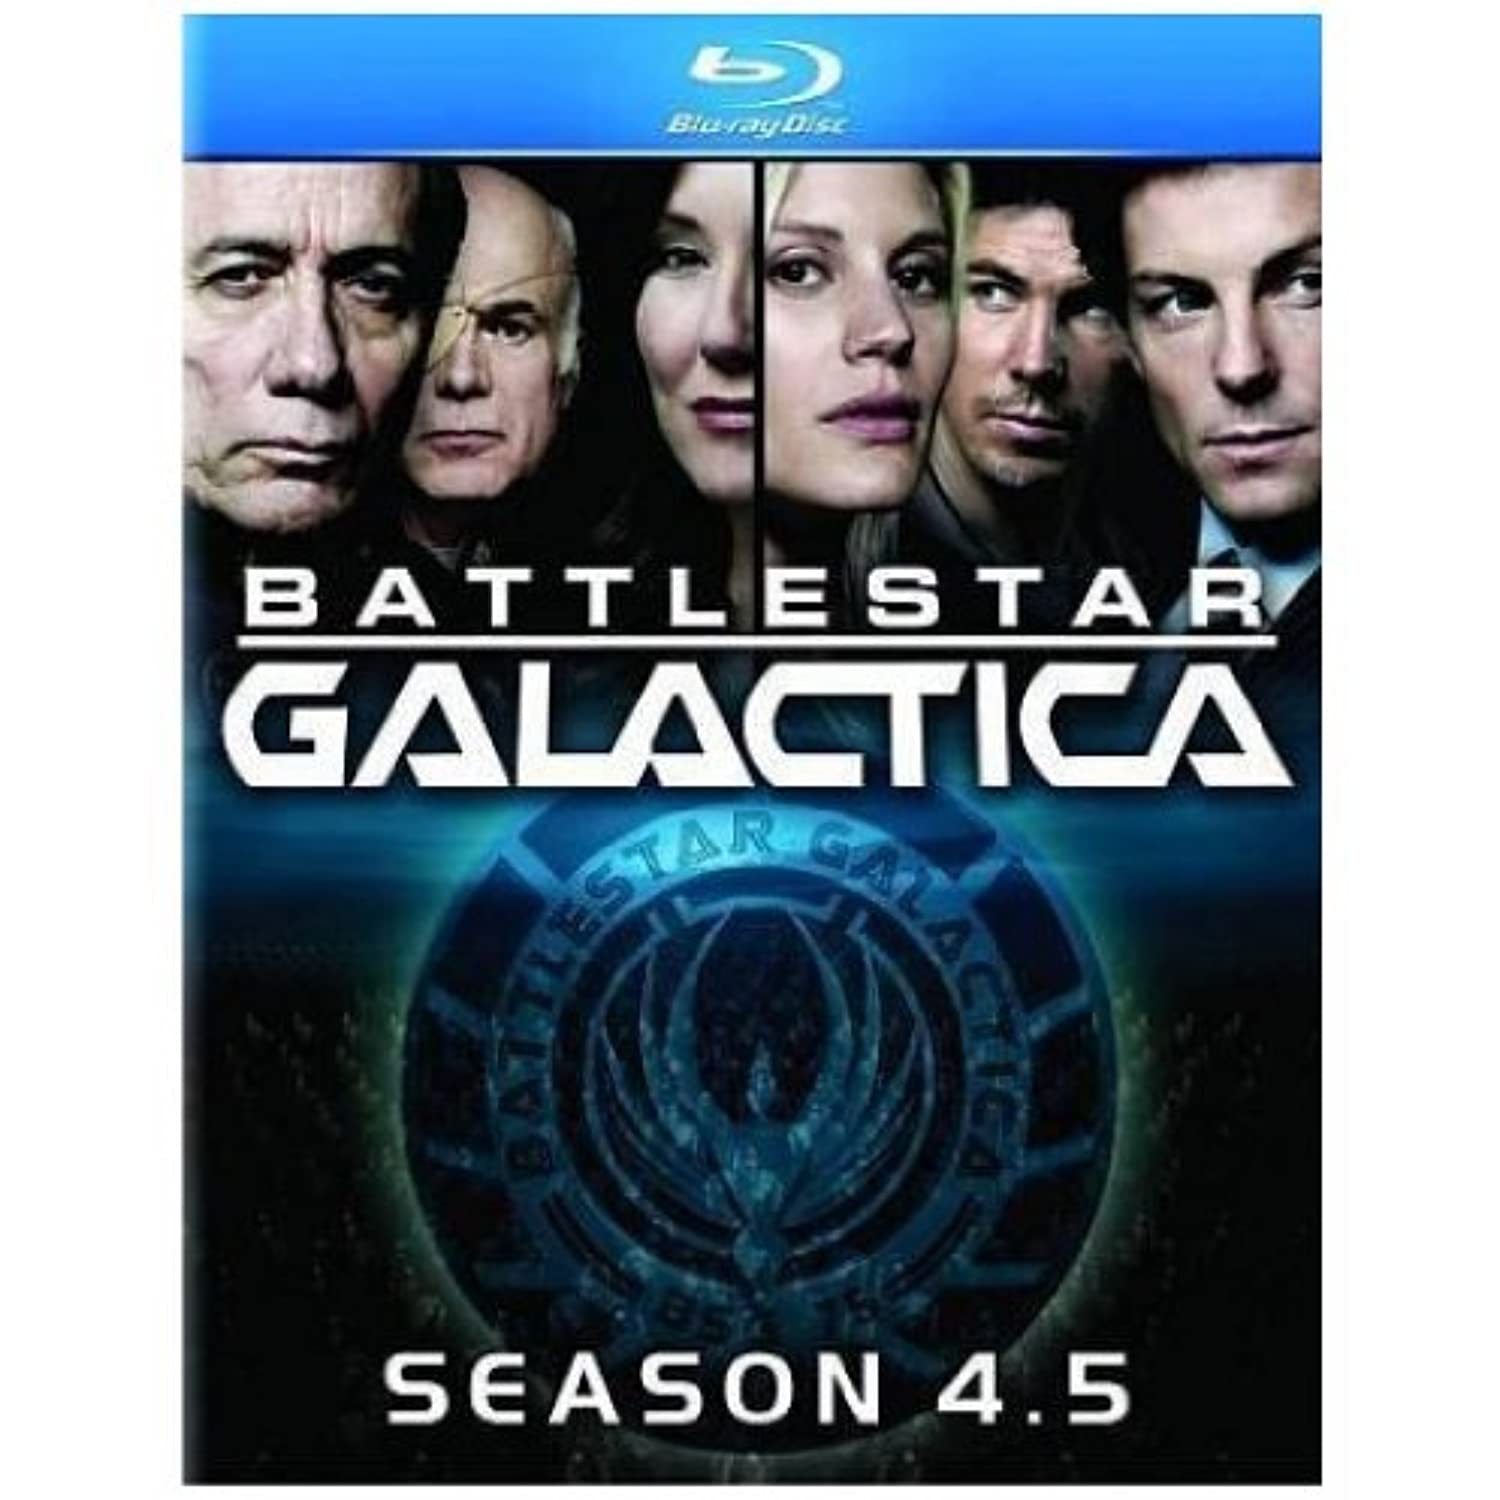 Battlestar Galactica Season 4.5 [blu-ray] DVD